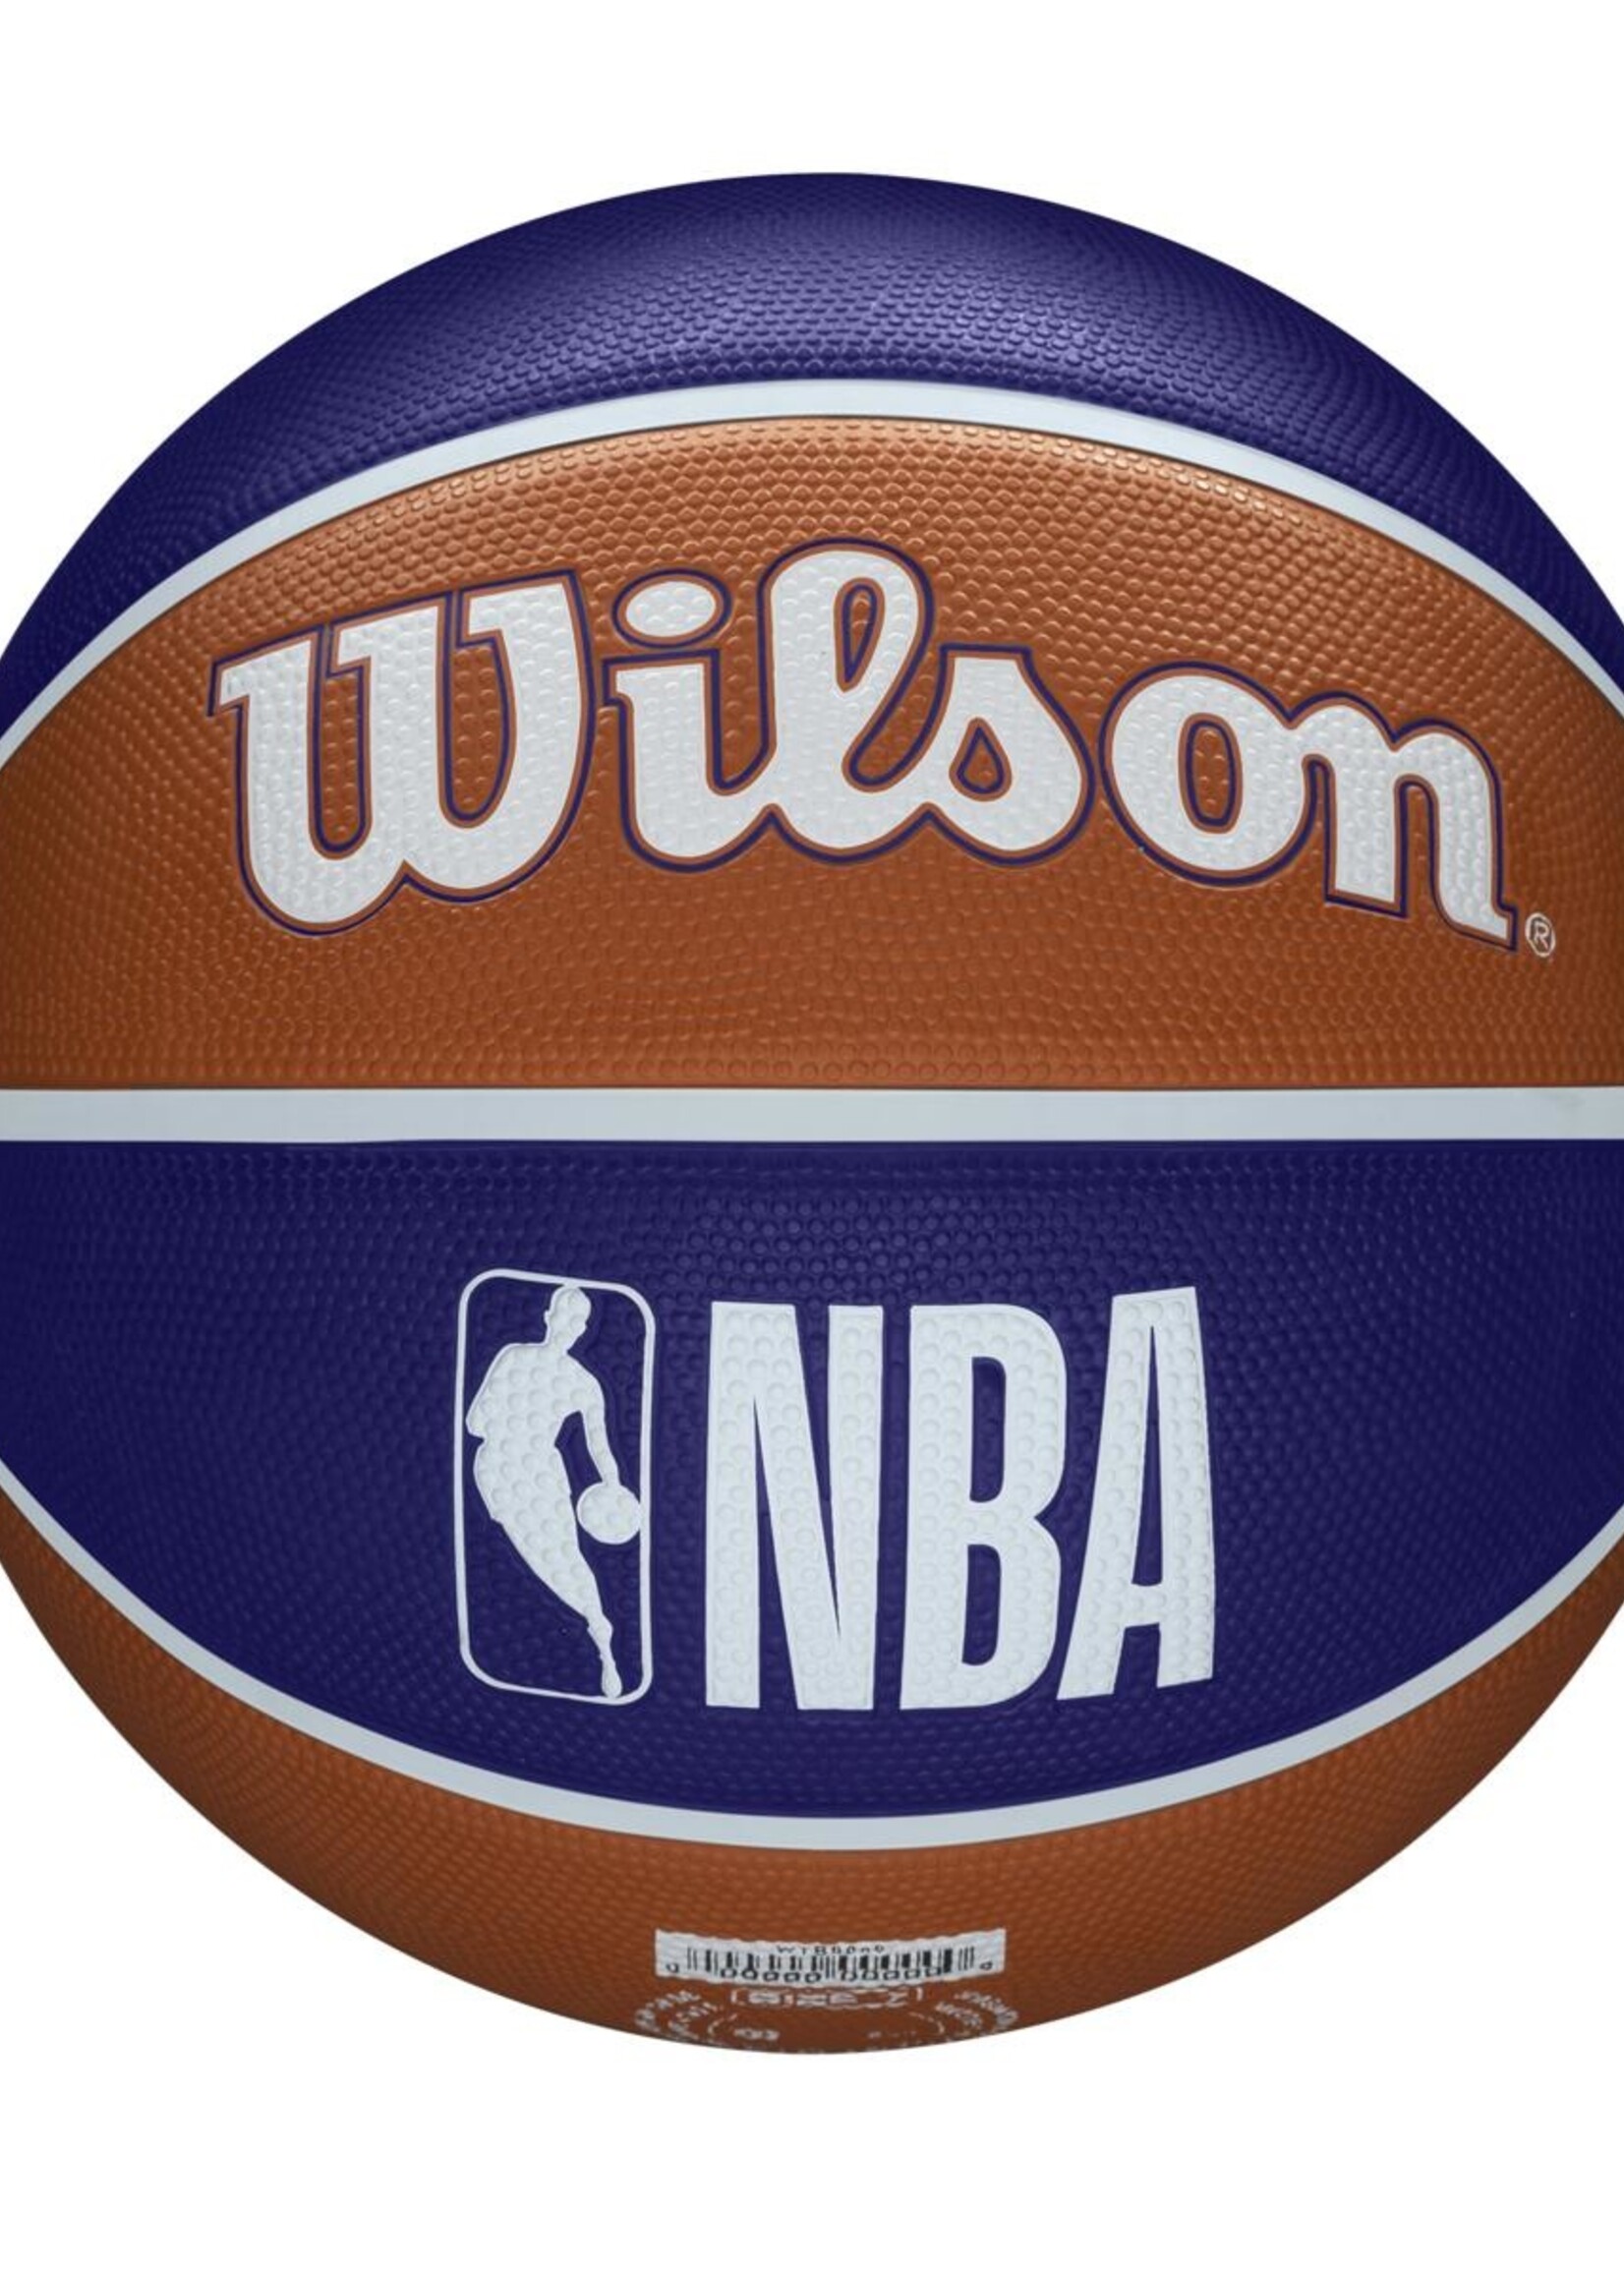 Wilson Wilson NBA PHOENIX SUNS Tribute basketball (7)